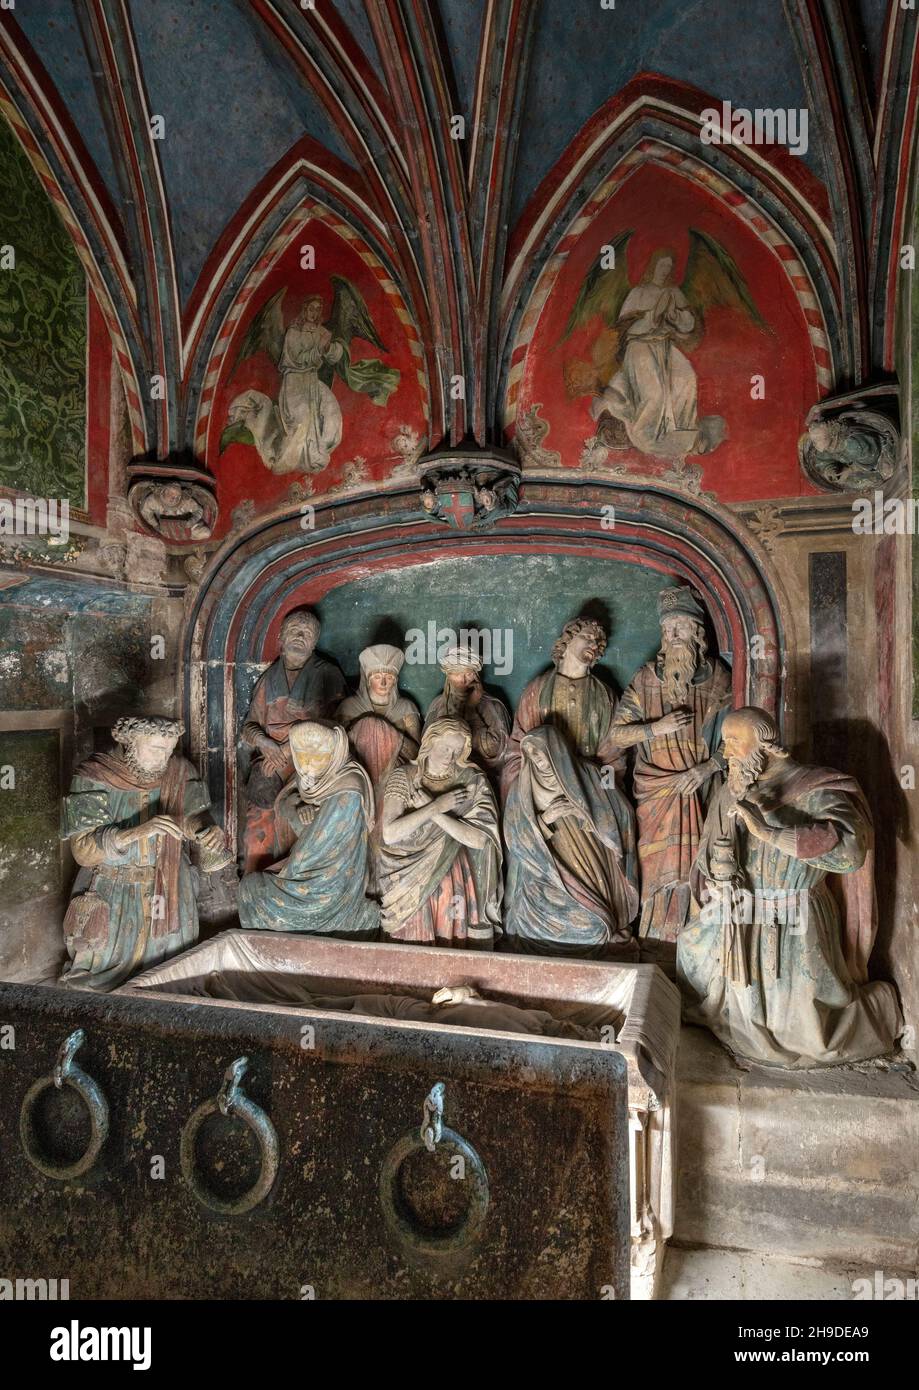 Chaumont, Basilika St-Jean-Baptiste, Grabstätte der Familie d’Amboise, Darstellung der Grablegung Christi, 15. Jahrhundert Stock Photo